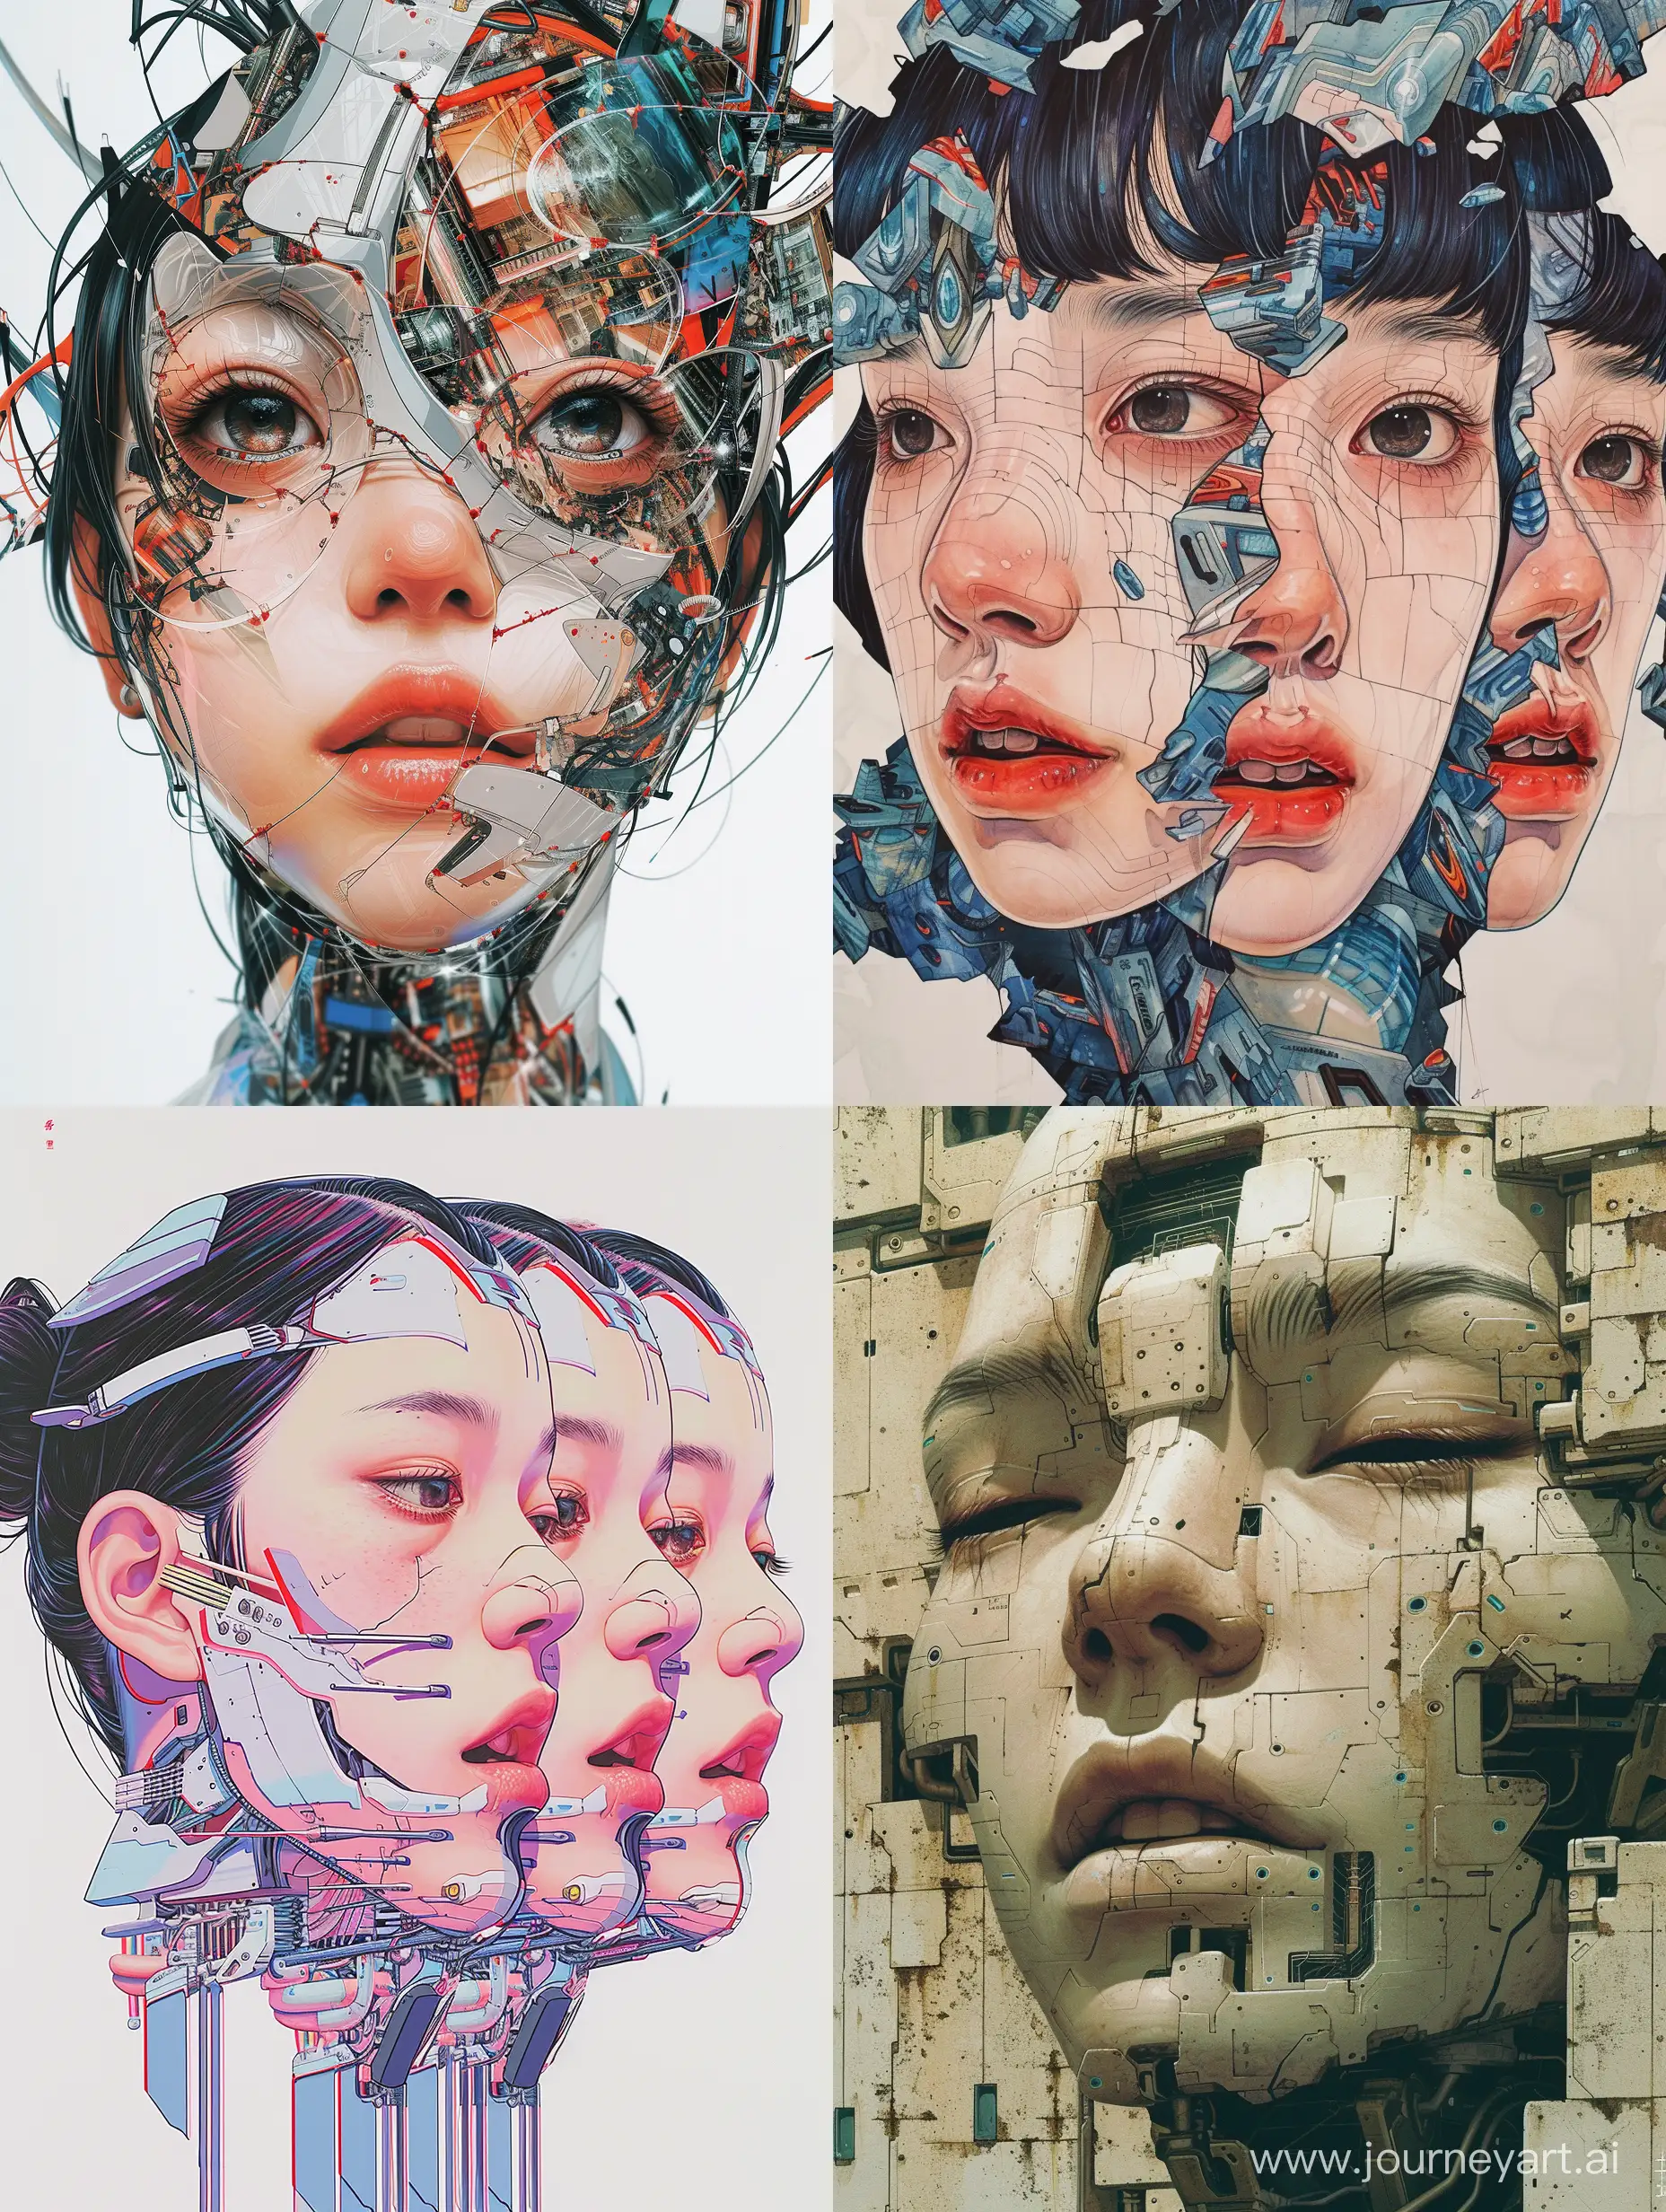 Futuristic-Cyberpunk-Art-Multiplicated-Facial-Features-in-Shintaro-Kago-Style